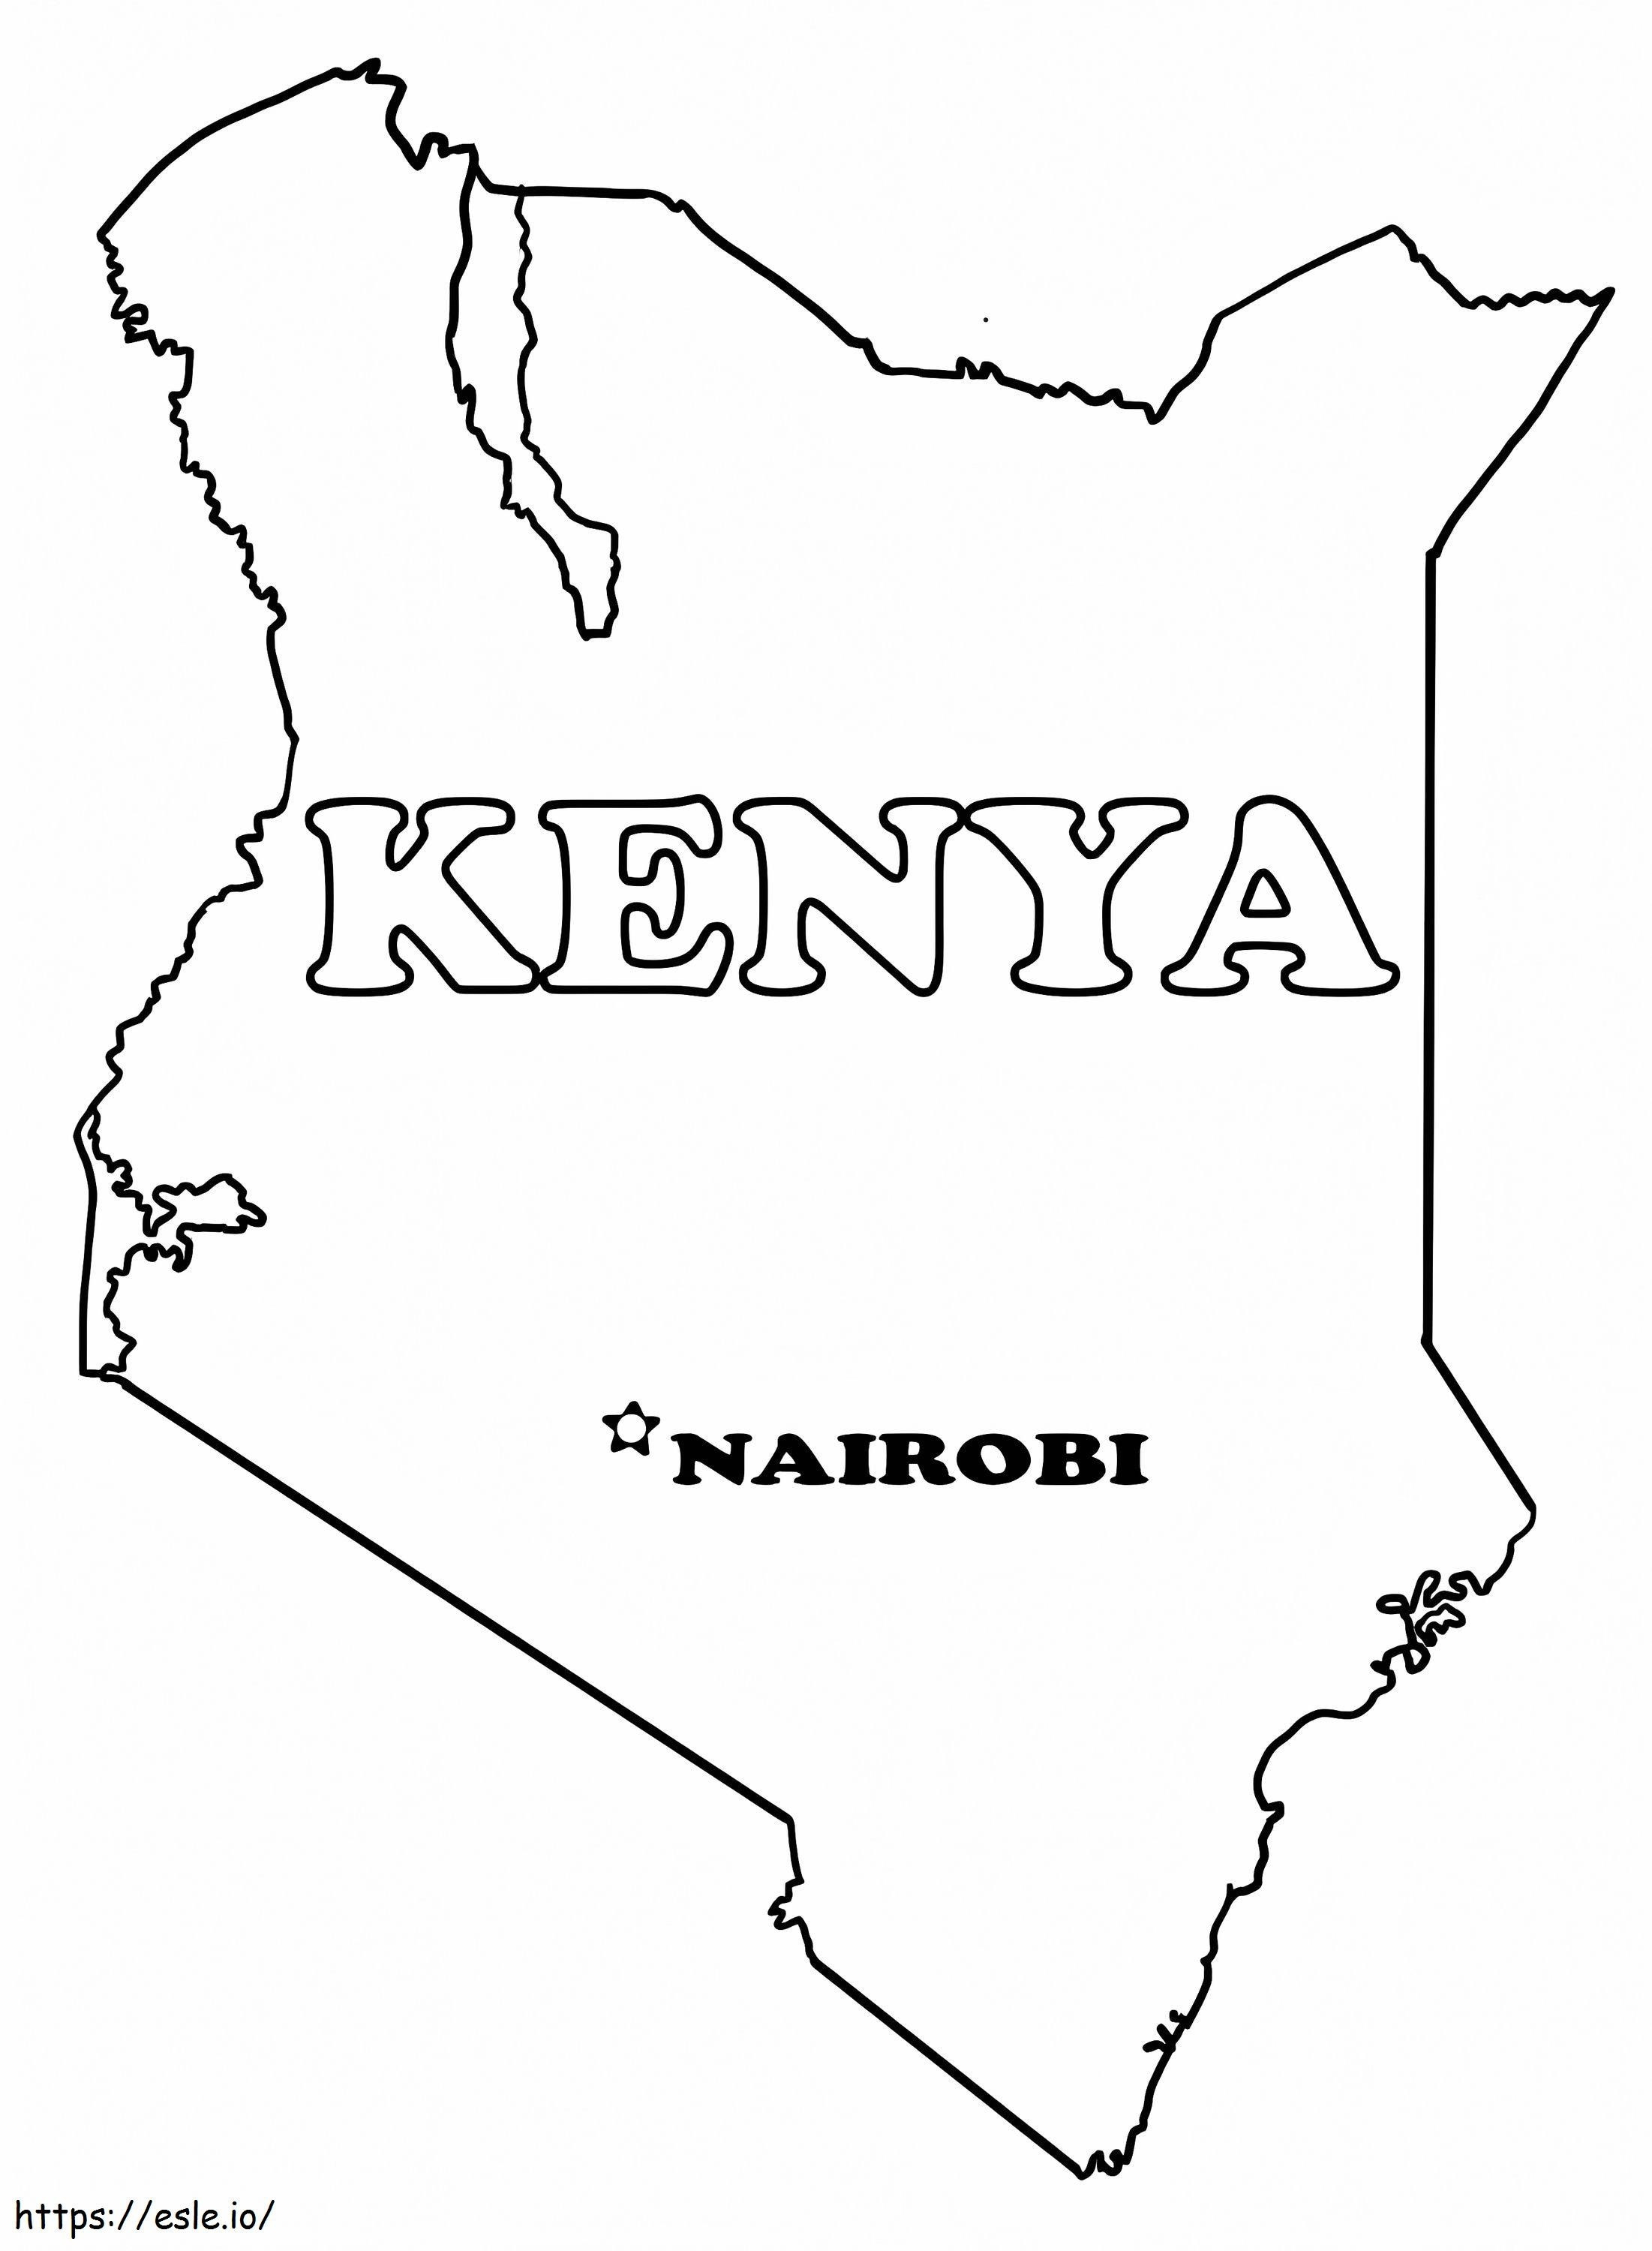 Map Of Kenya coloring page